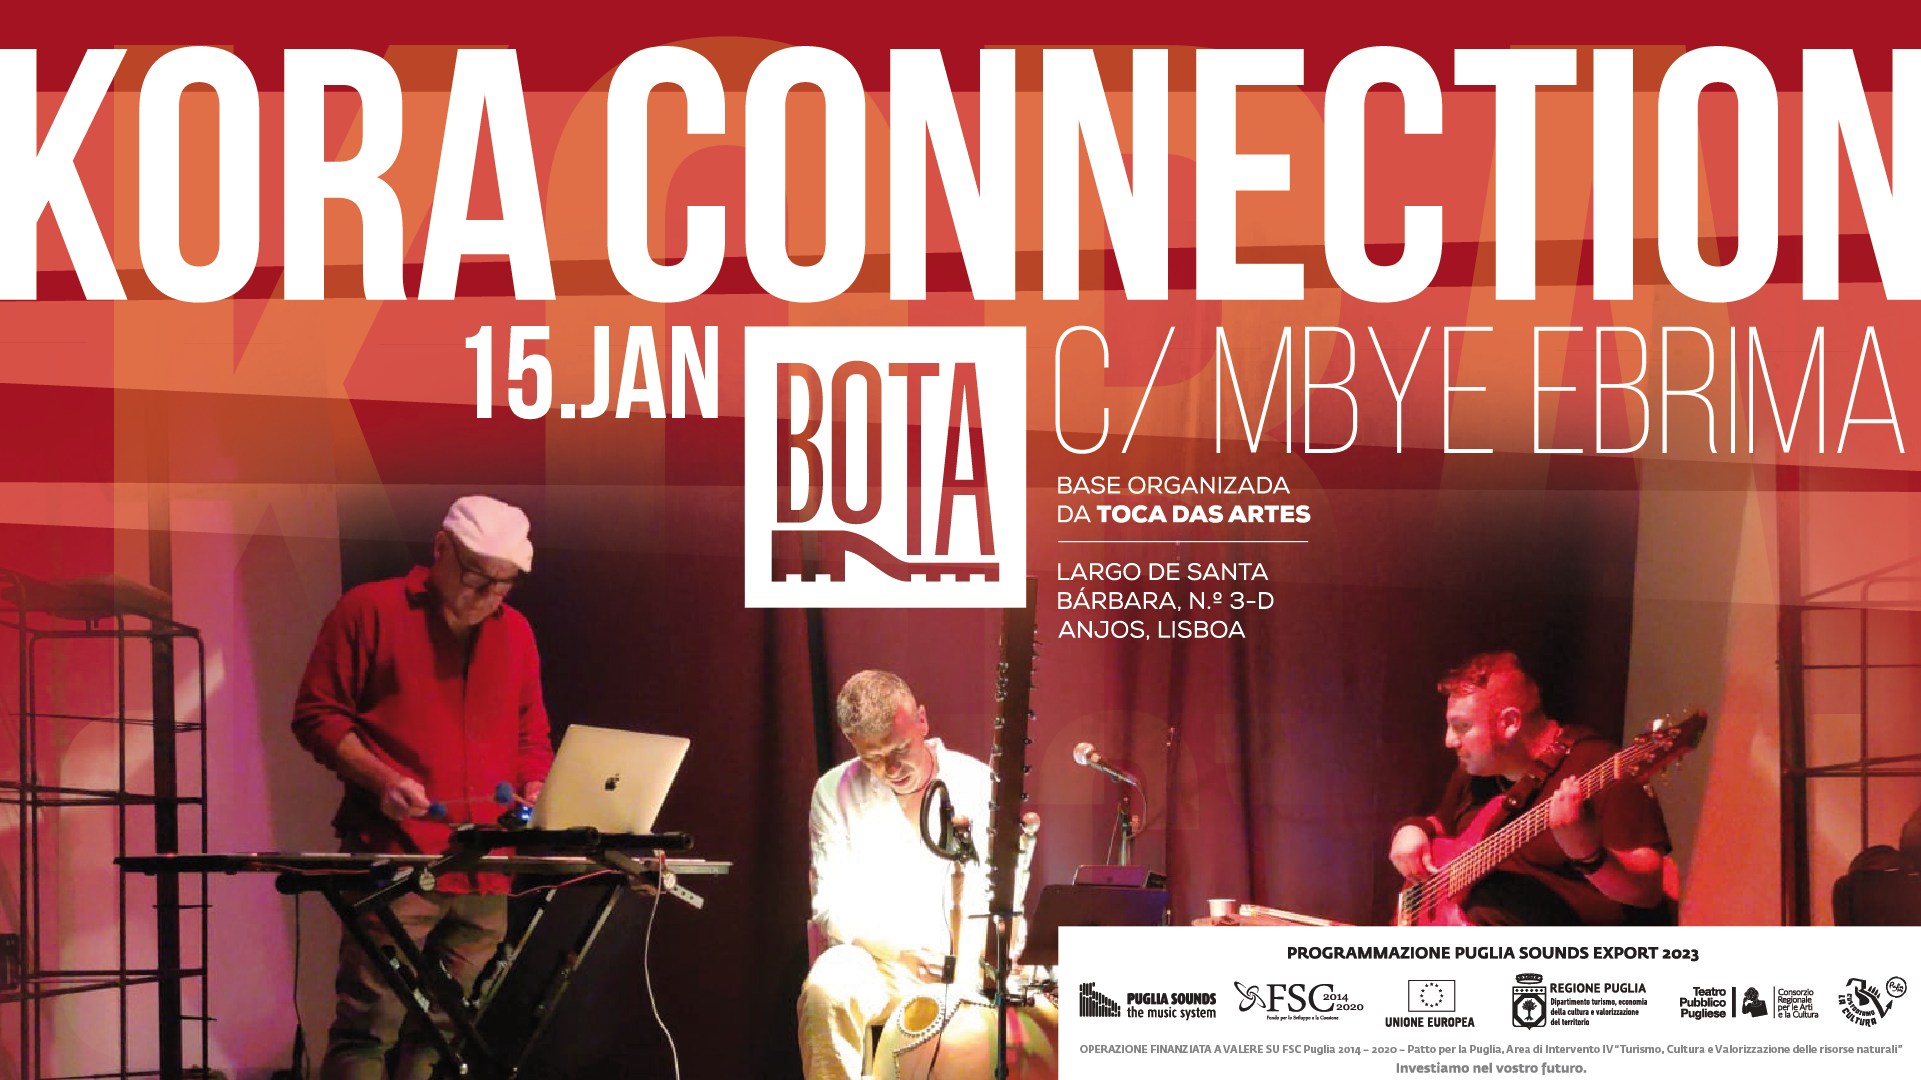 KORA CONNECTION - B.O.T.A feat. Mbye Egrima